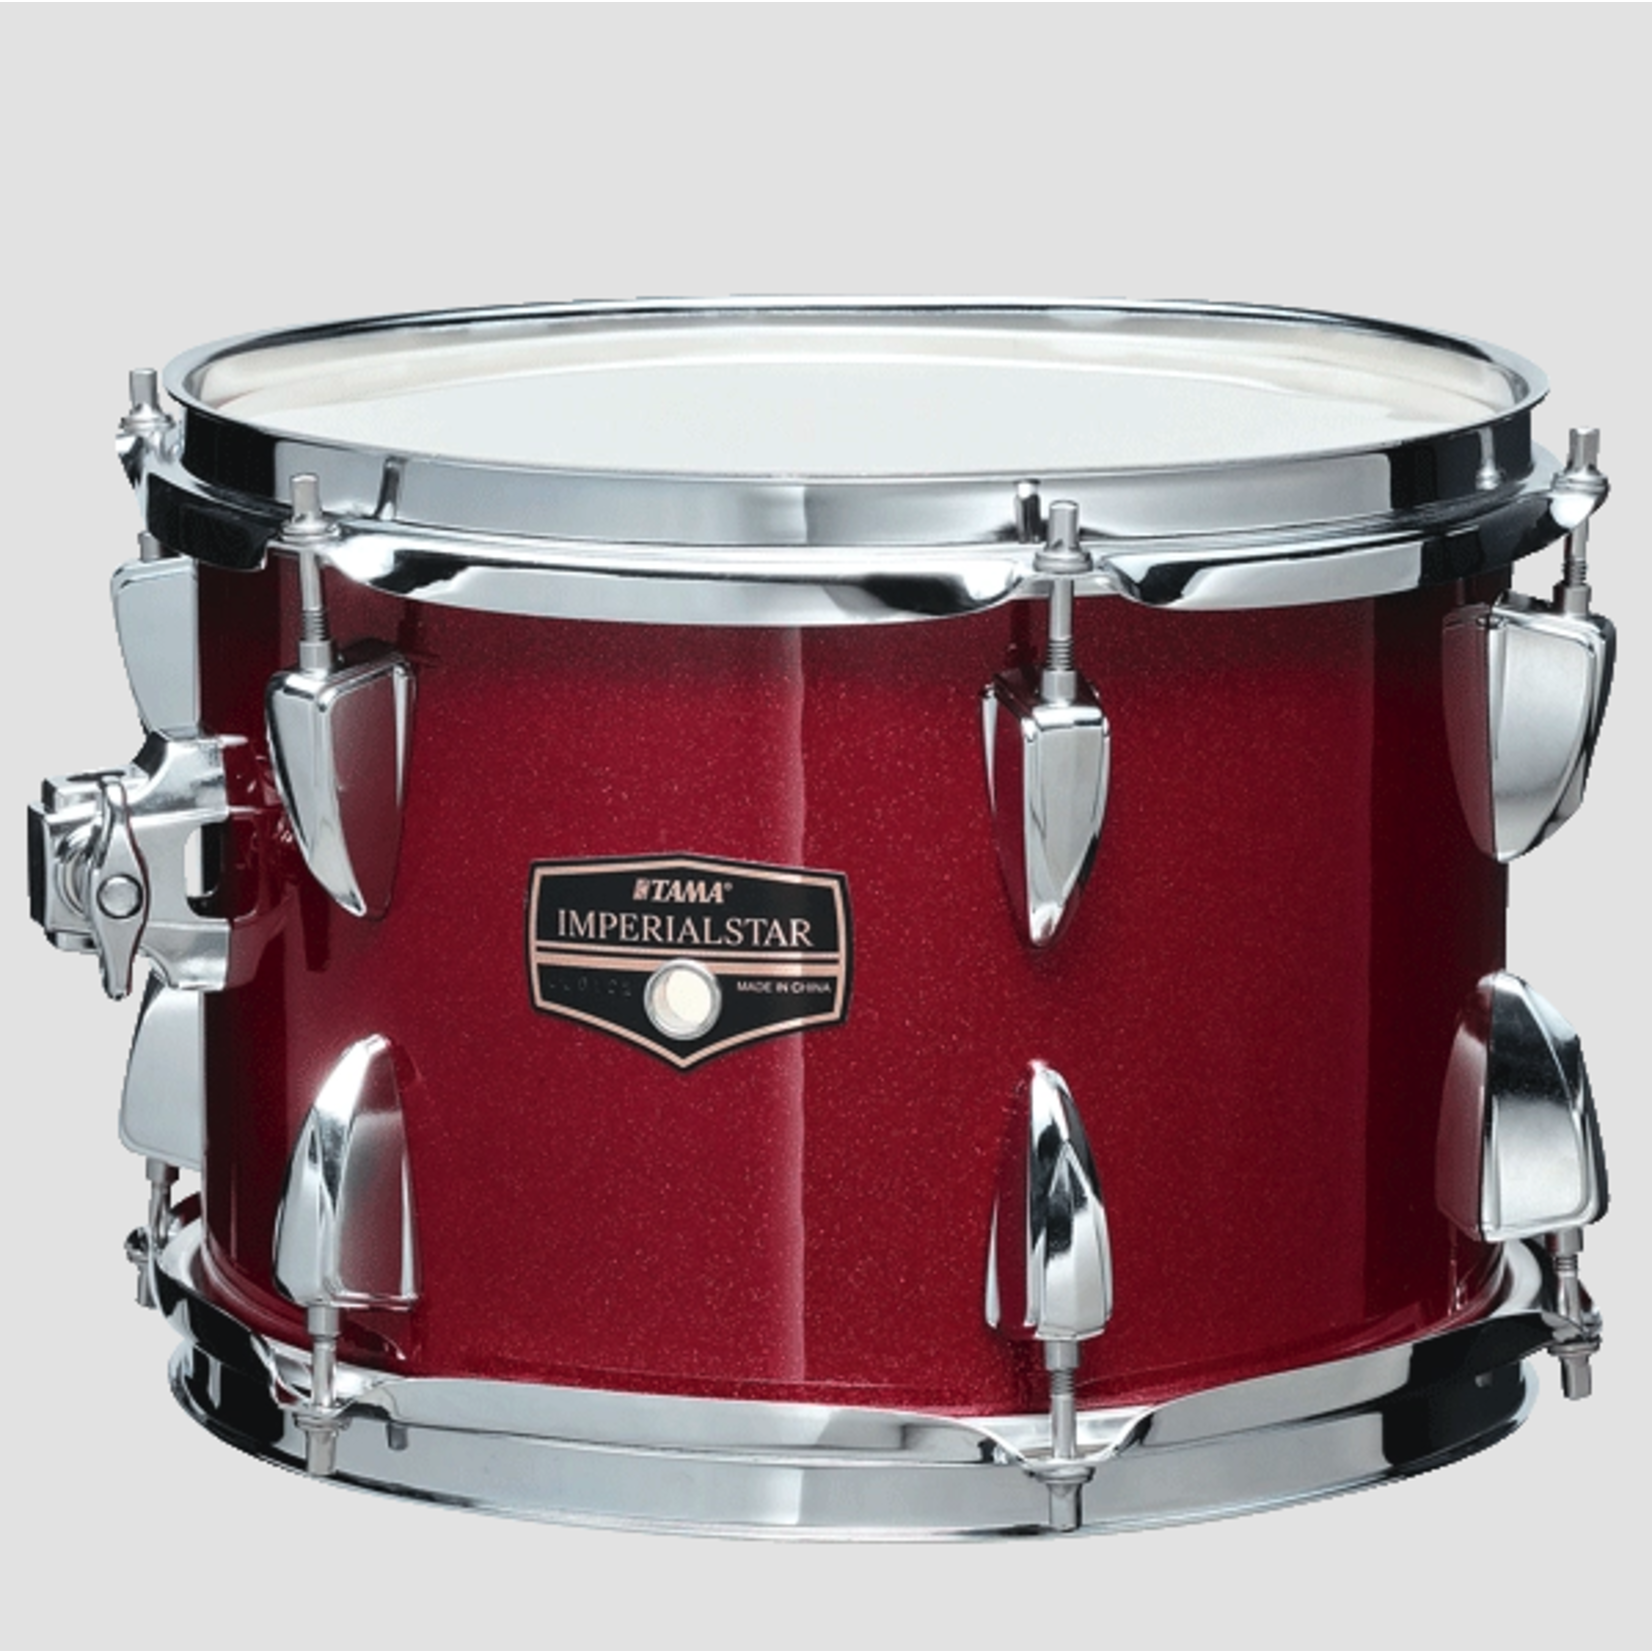 Tama Imperialstar IE58C 5-piece Complete Drum Set - Candy Apple Mist